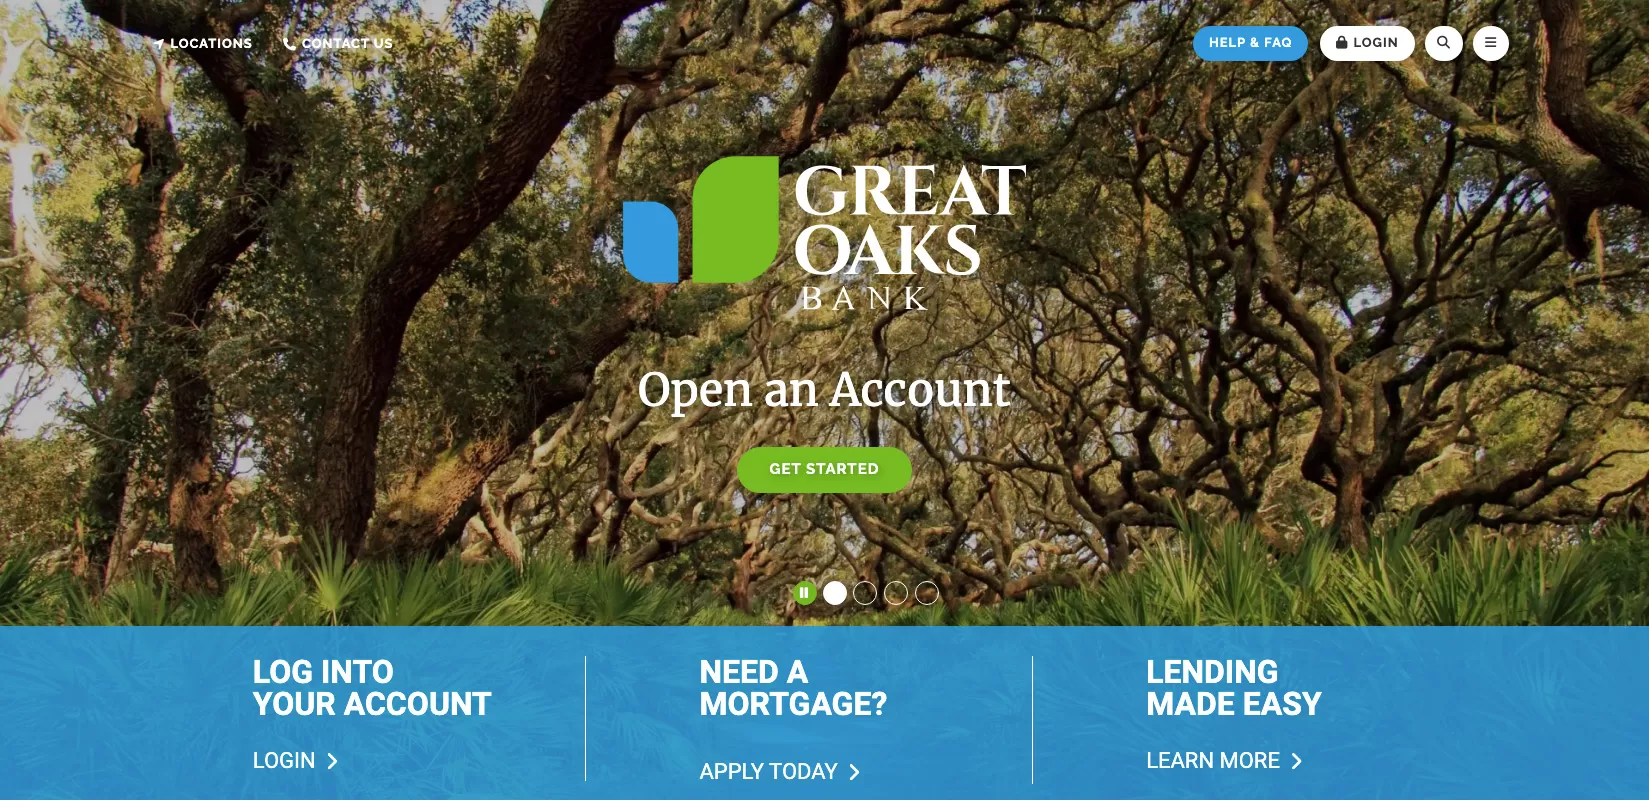 Great Oaks bank | Financial, High Security Website Design and Website Development